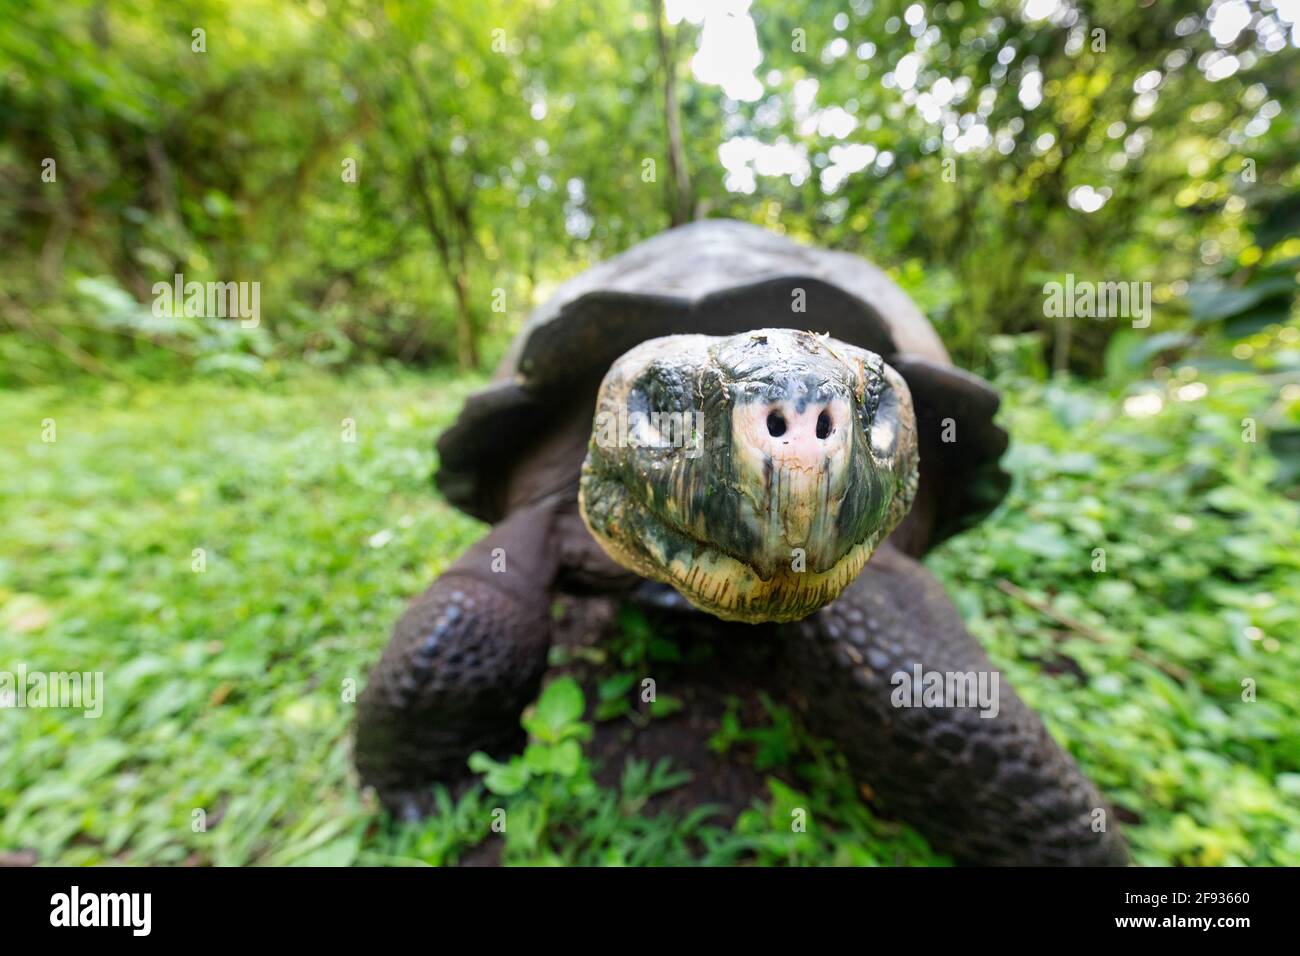 La tartaruga più grande del mondo. Galapagos tartaruga gigante, Chelonoidis niger. Isole Galapagos. Isola di Santa Cruz. (Foto CTK/Ondrej Zaruba) Foto Stock